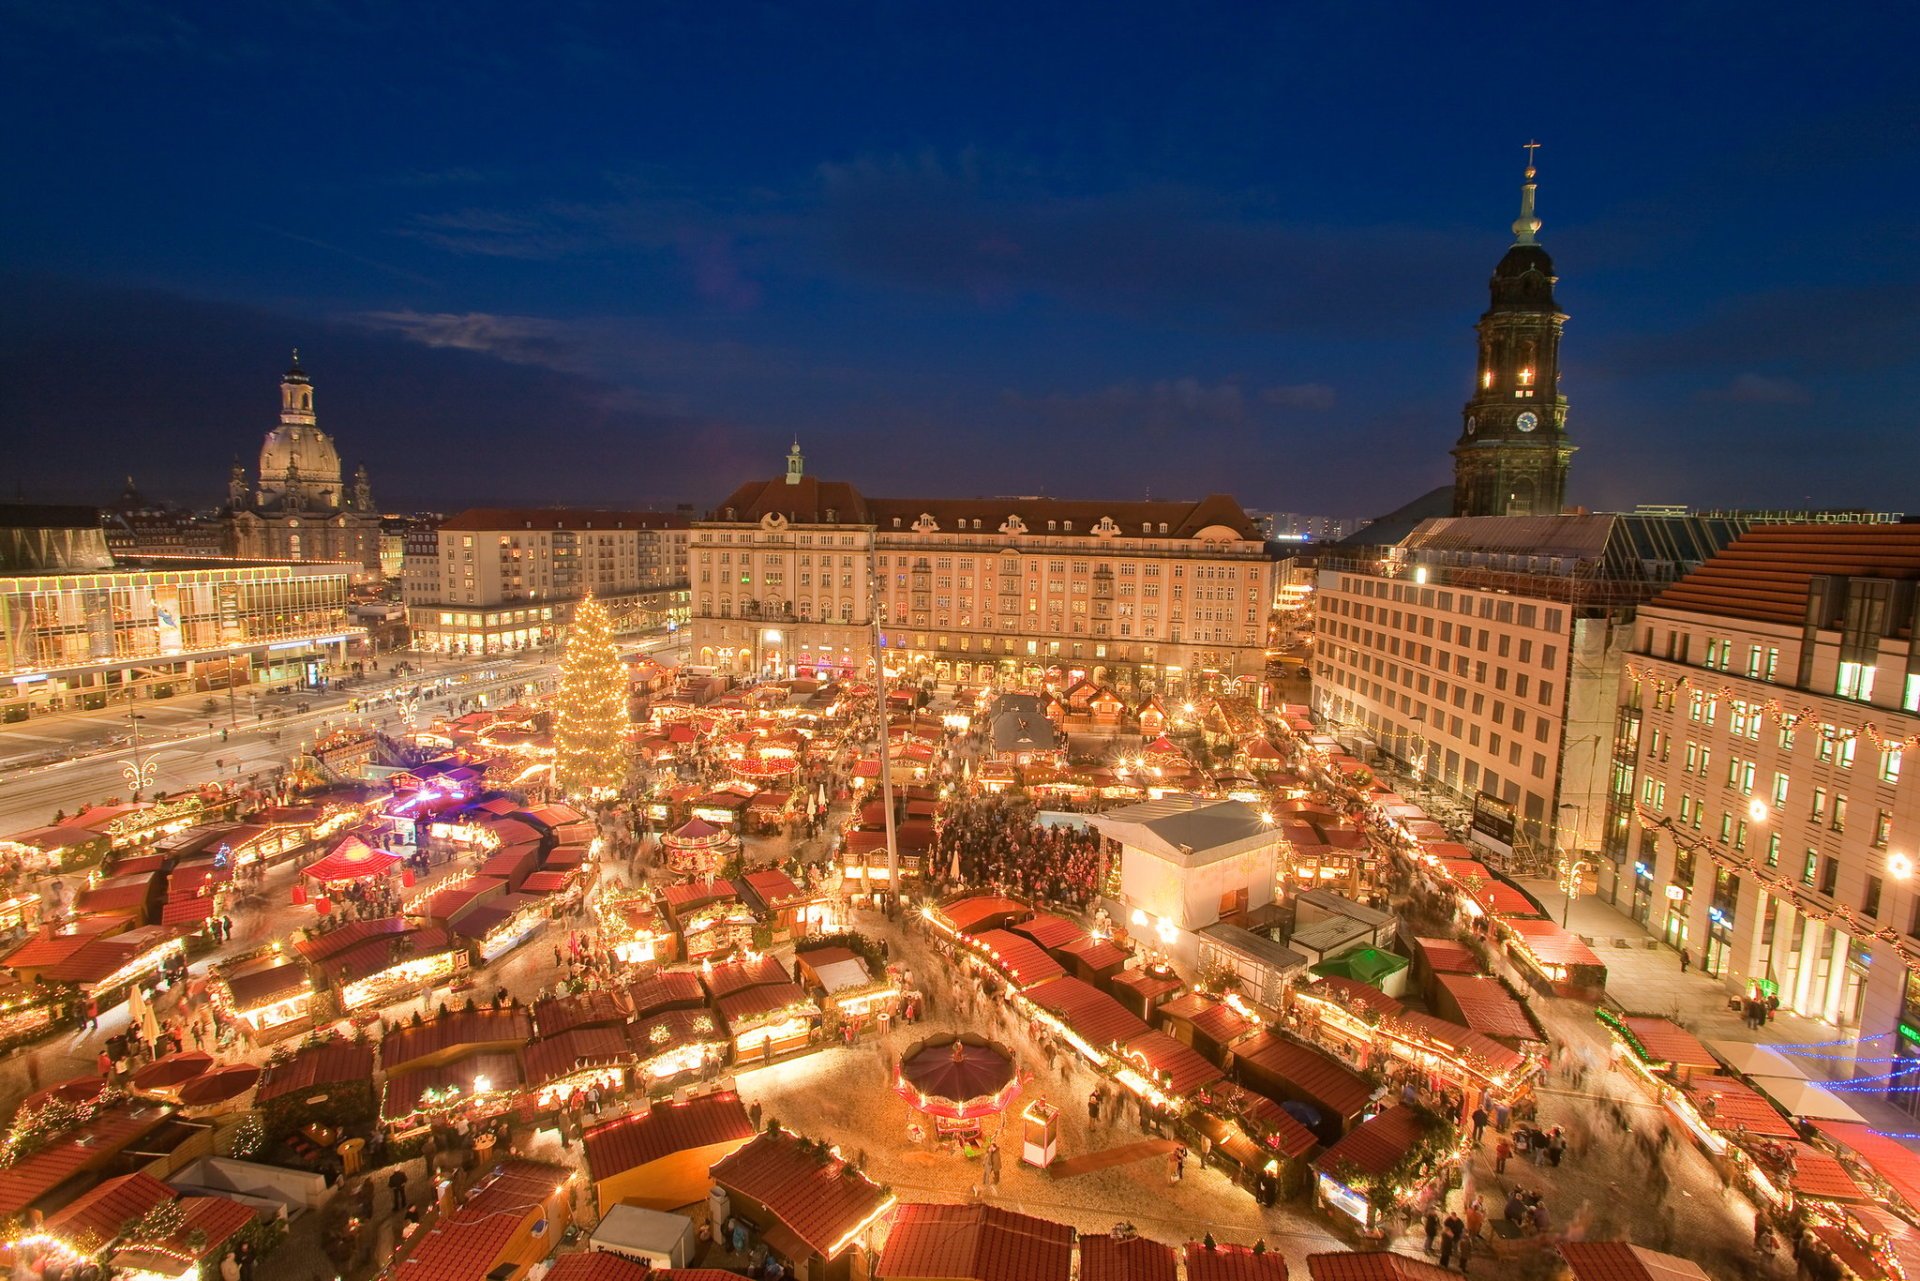 Marché de Noël de Dresden